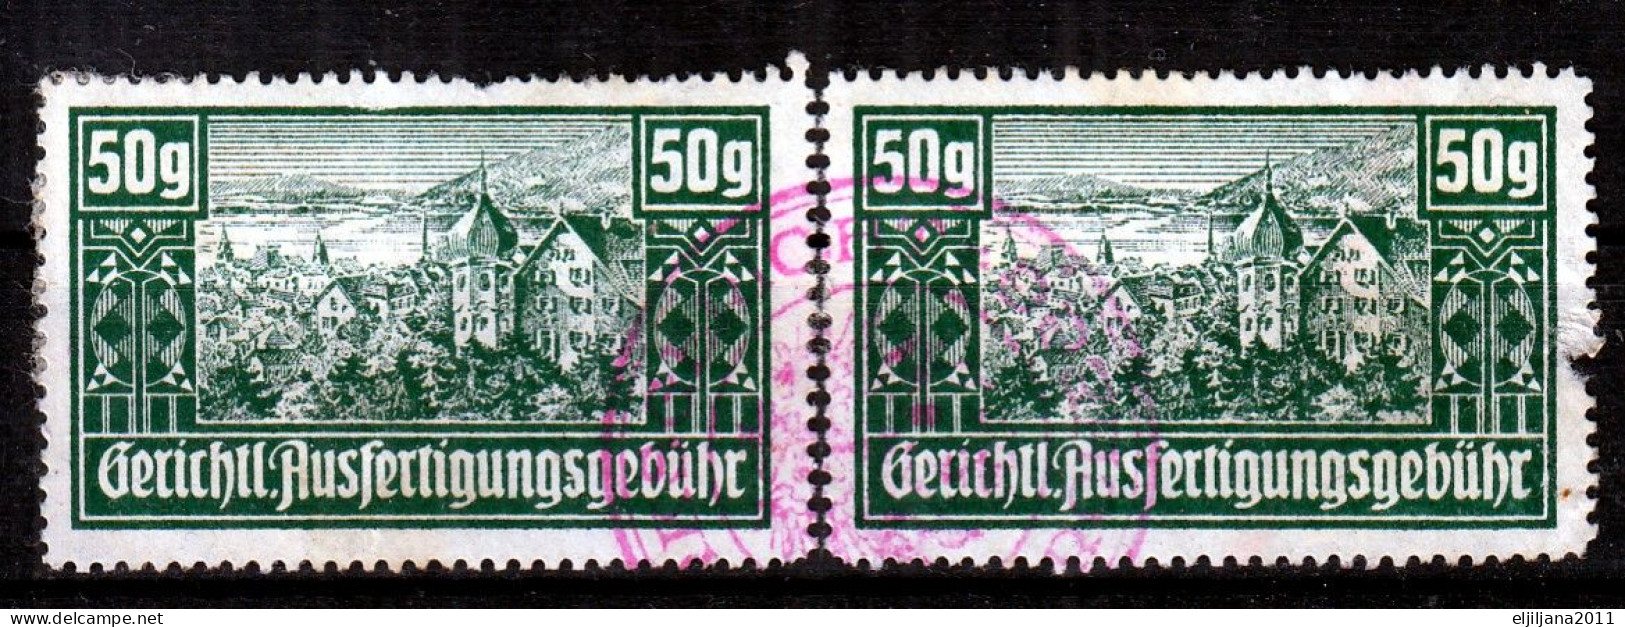 Austria Revenue / Tax ⁕ Gerichtl. Ausfertigungsgebühr 50 G. ⁕ 2v Used - Revenue Stamps